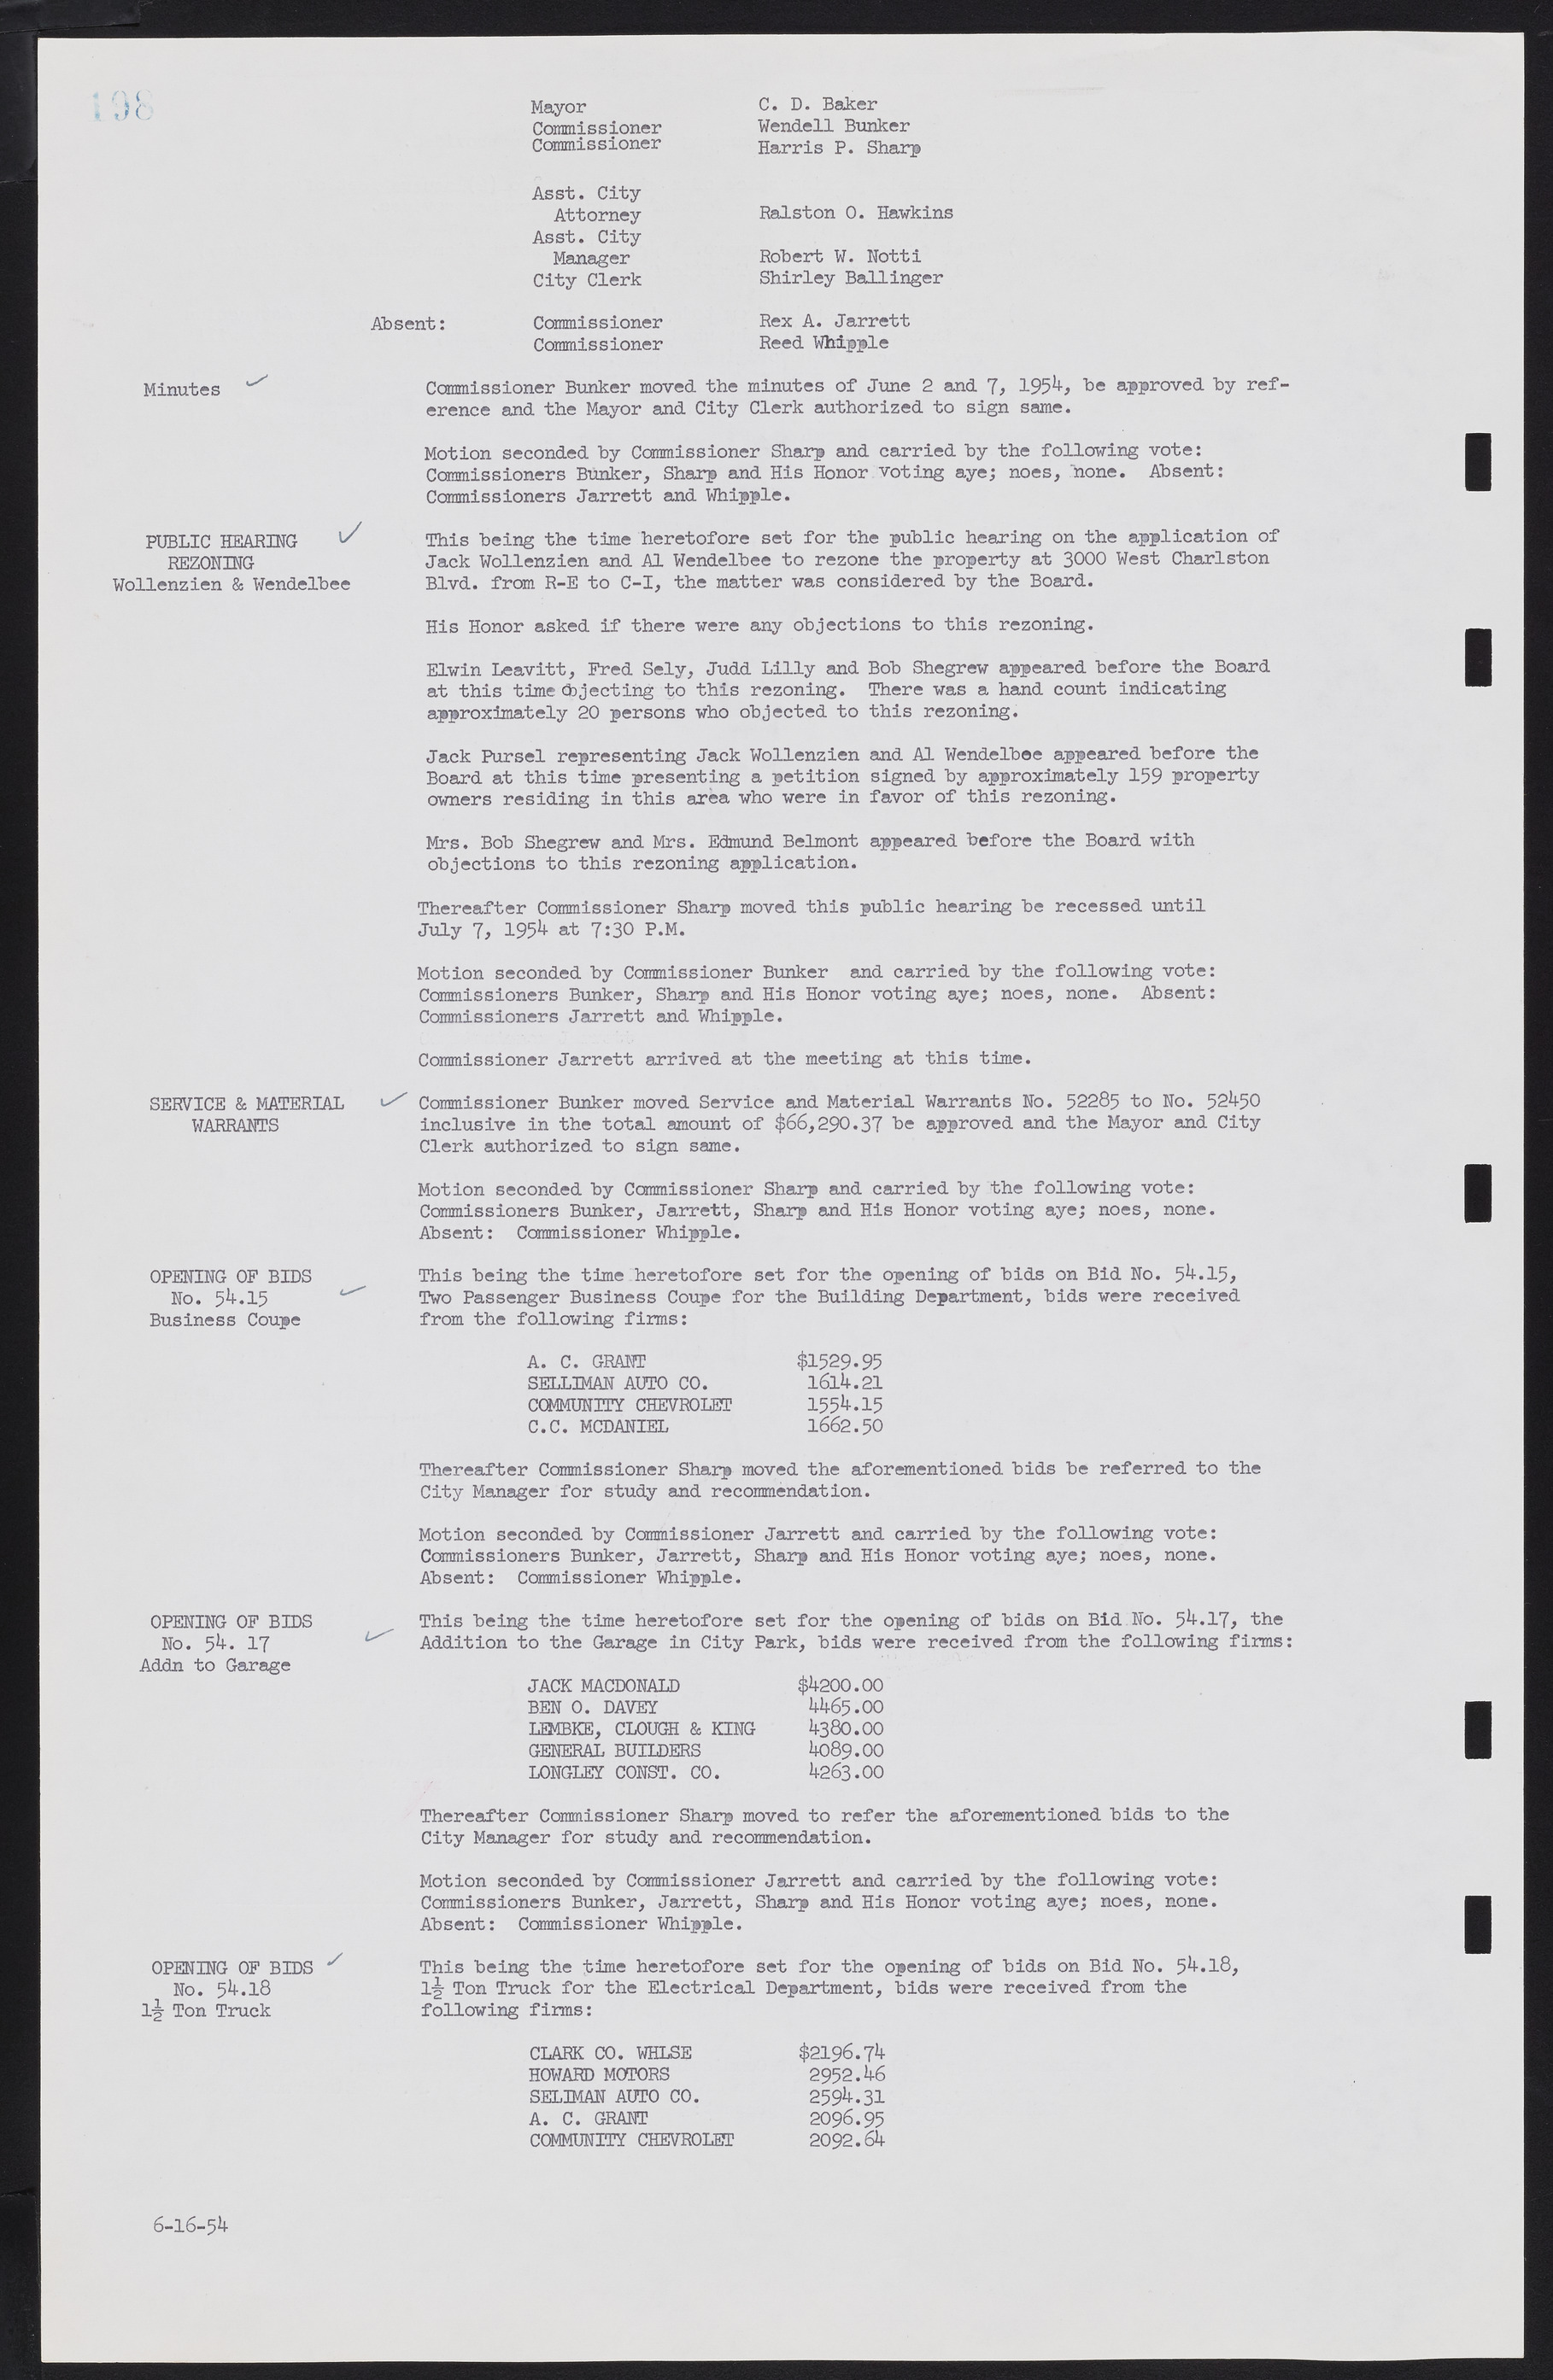 Las Vegas City Commission Minutes, February 17, 1954 to September 21, 1955, lvc000009-204